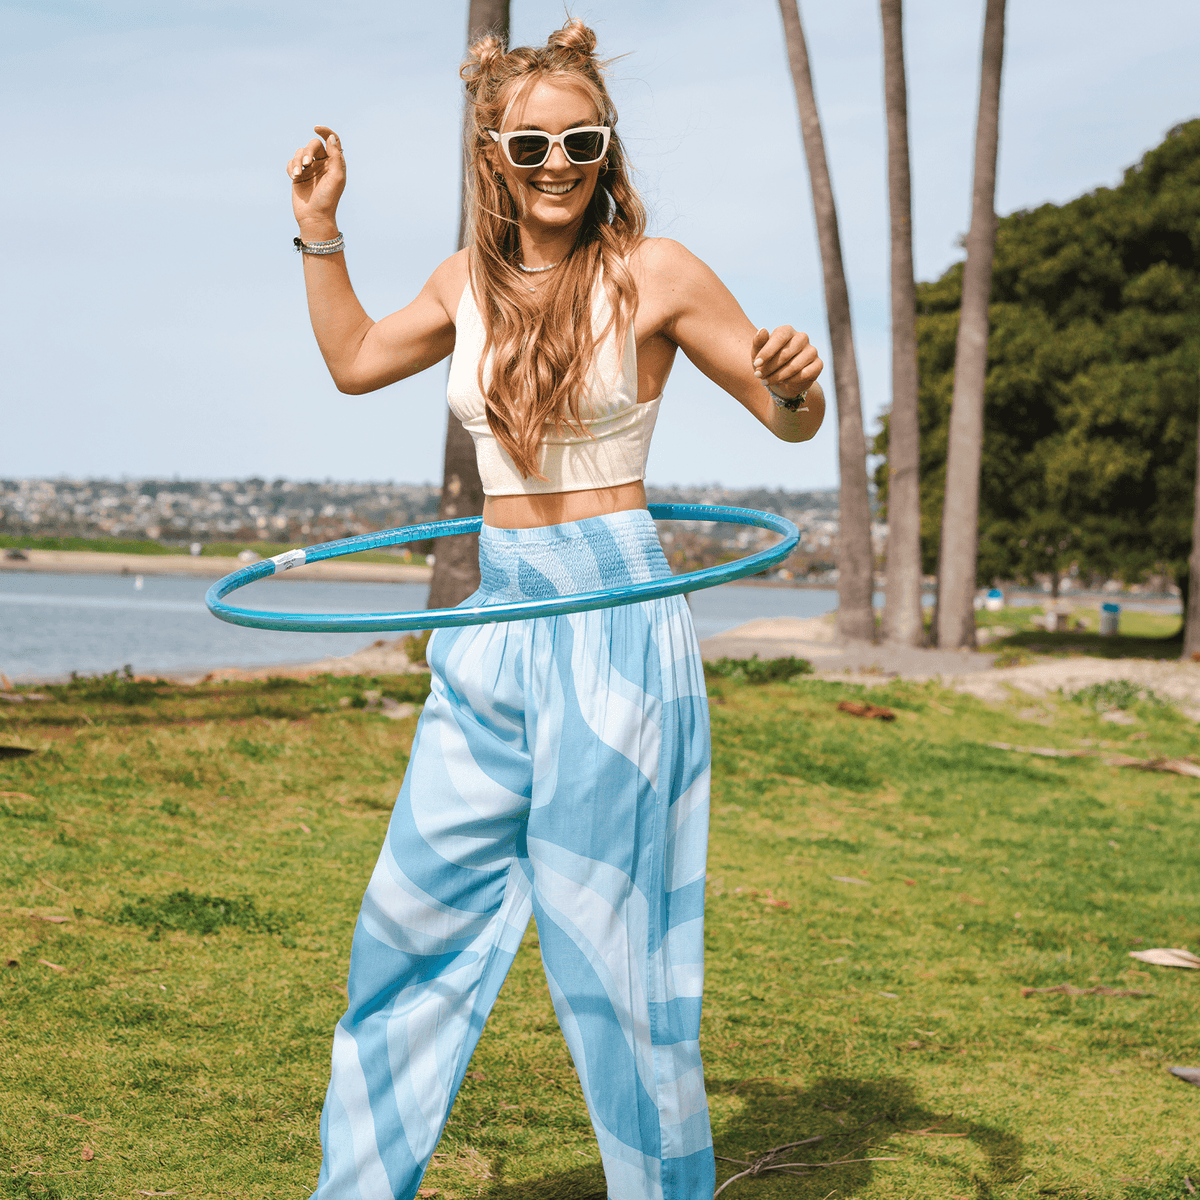 Model hula hooping while wearing blue swirl harem pants